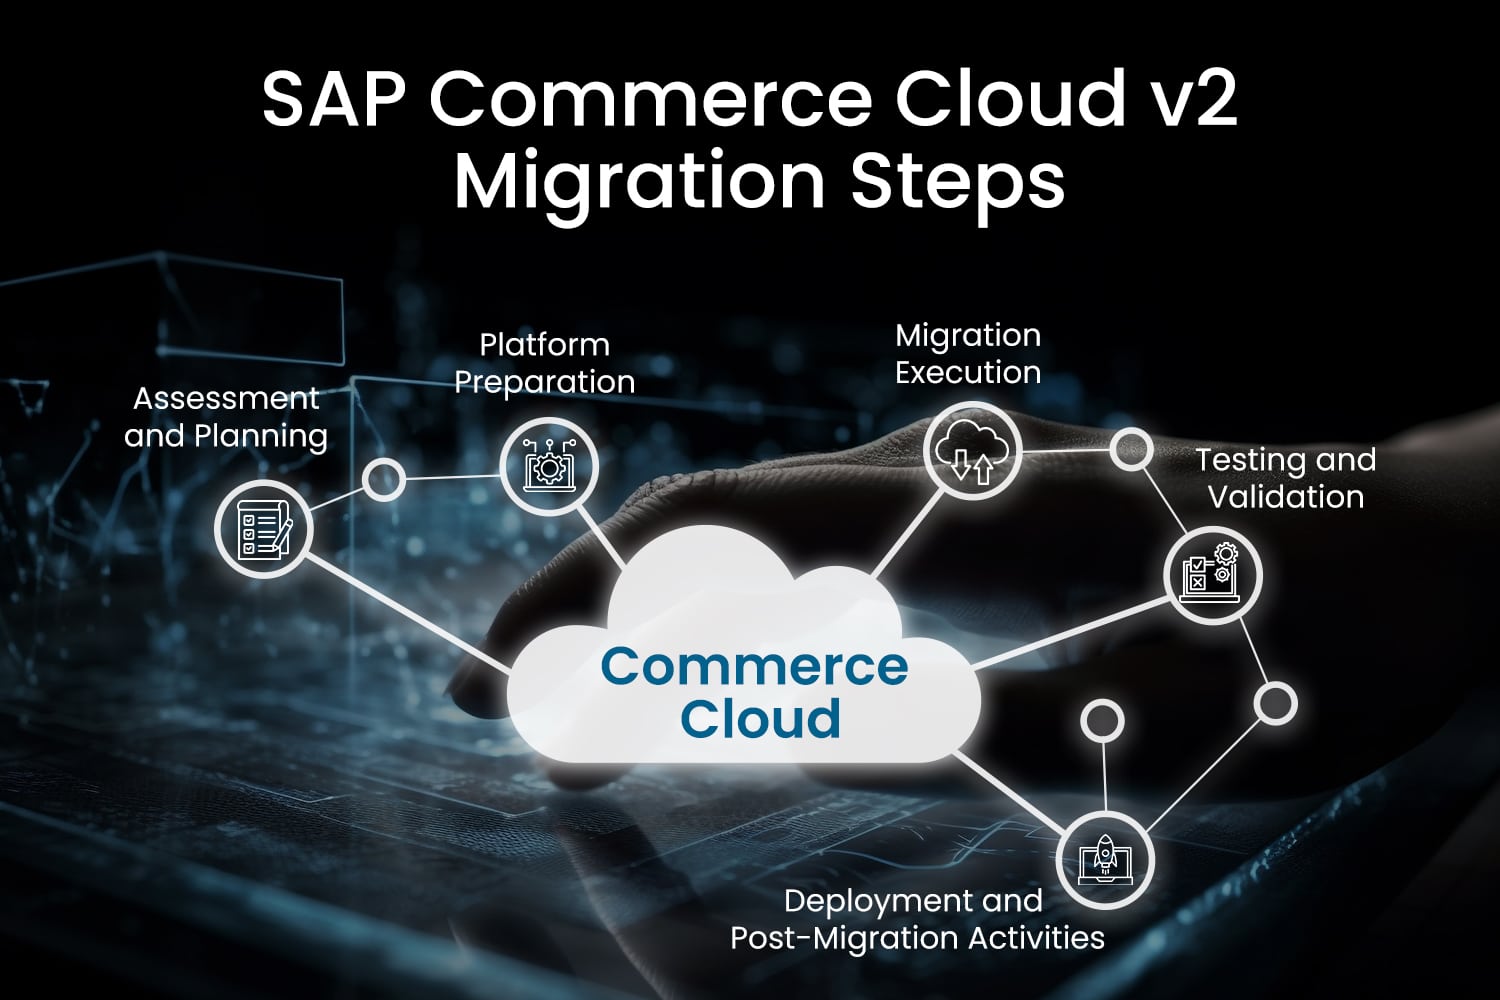 SAP CCv2 migration steps